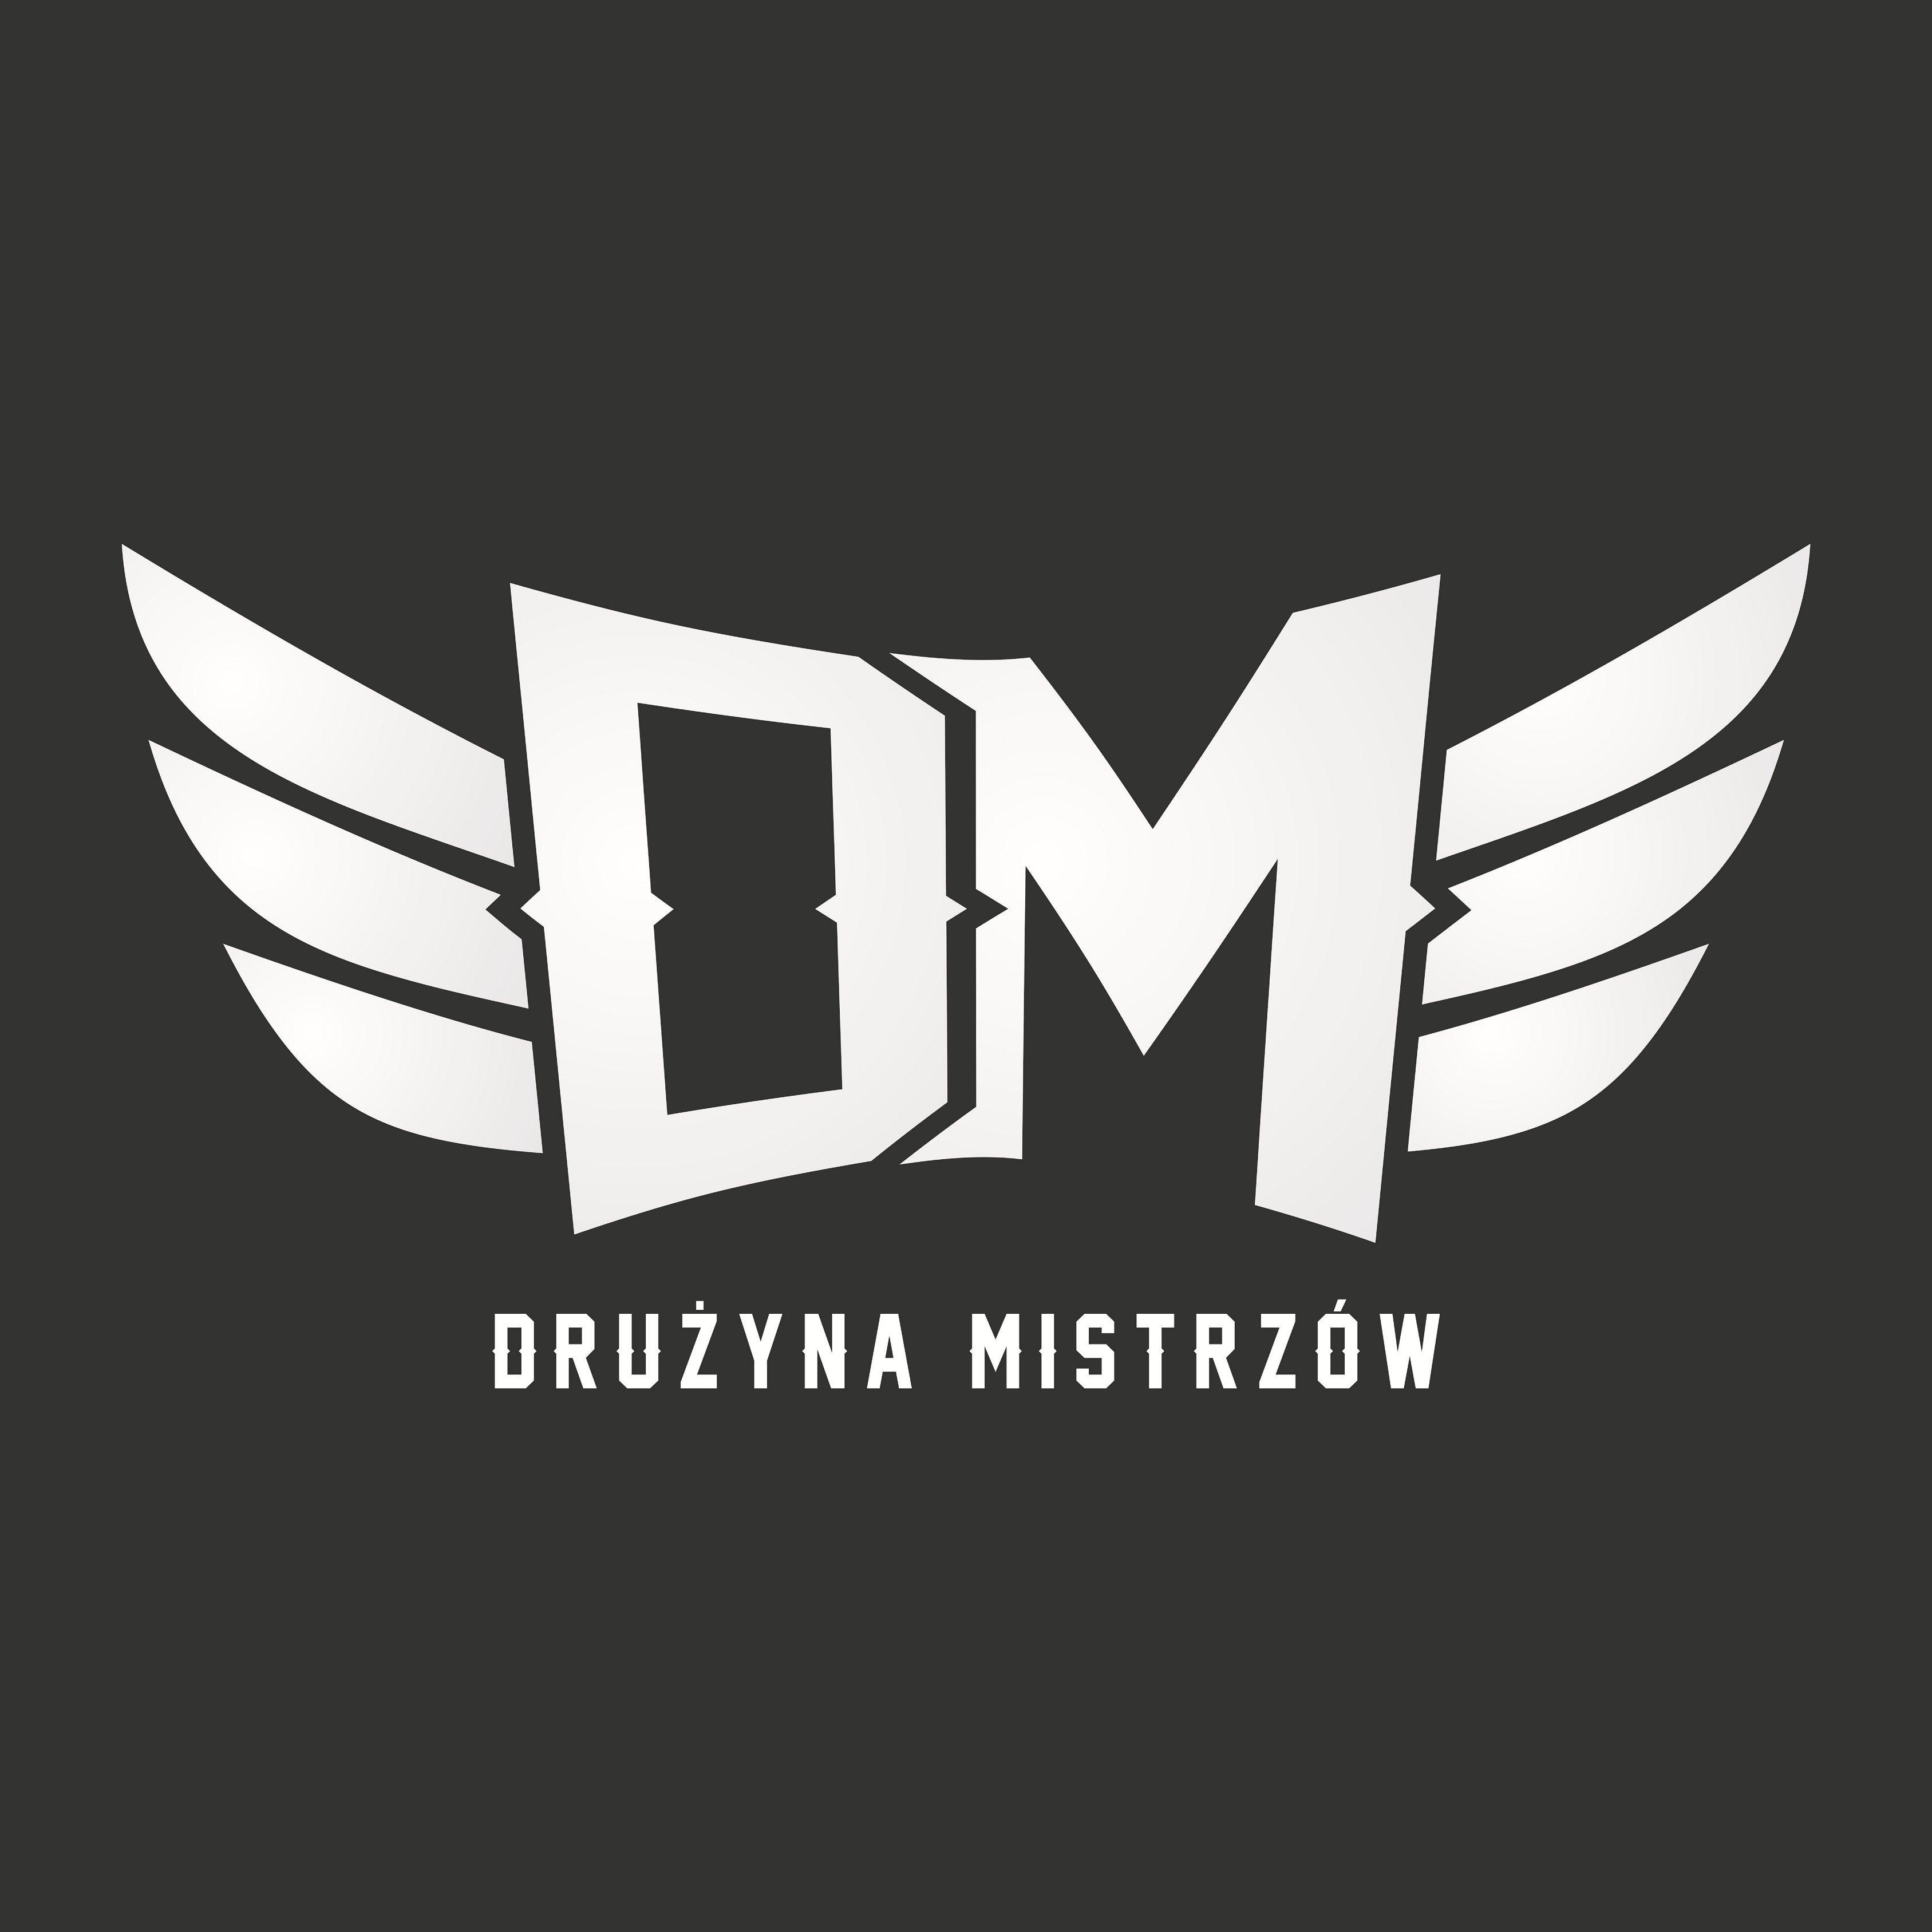 DM Logo - File:DM logo głowne.jpg - Wikimedia Commons